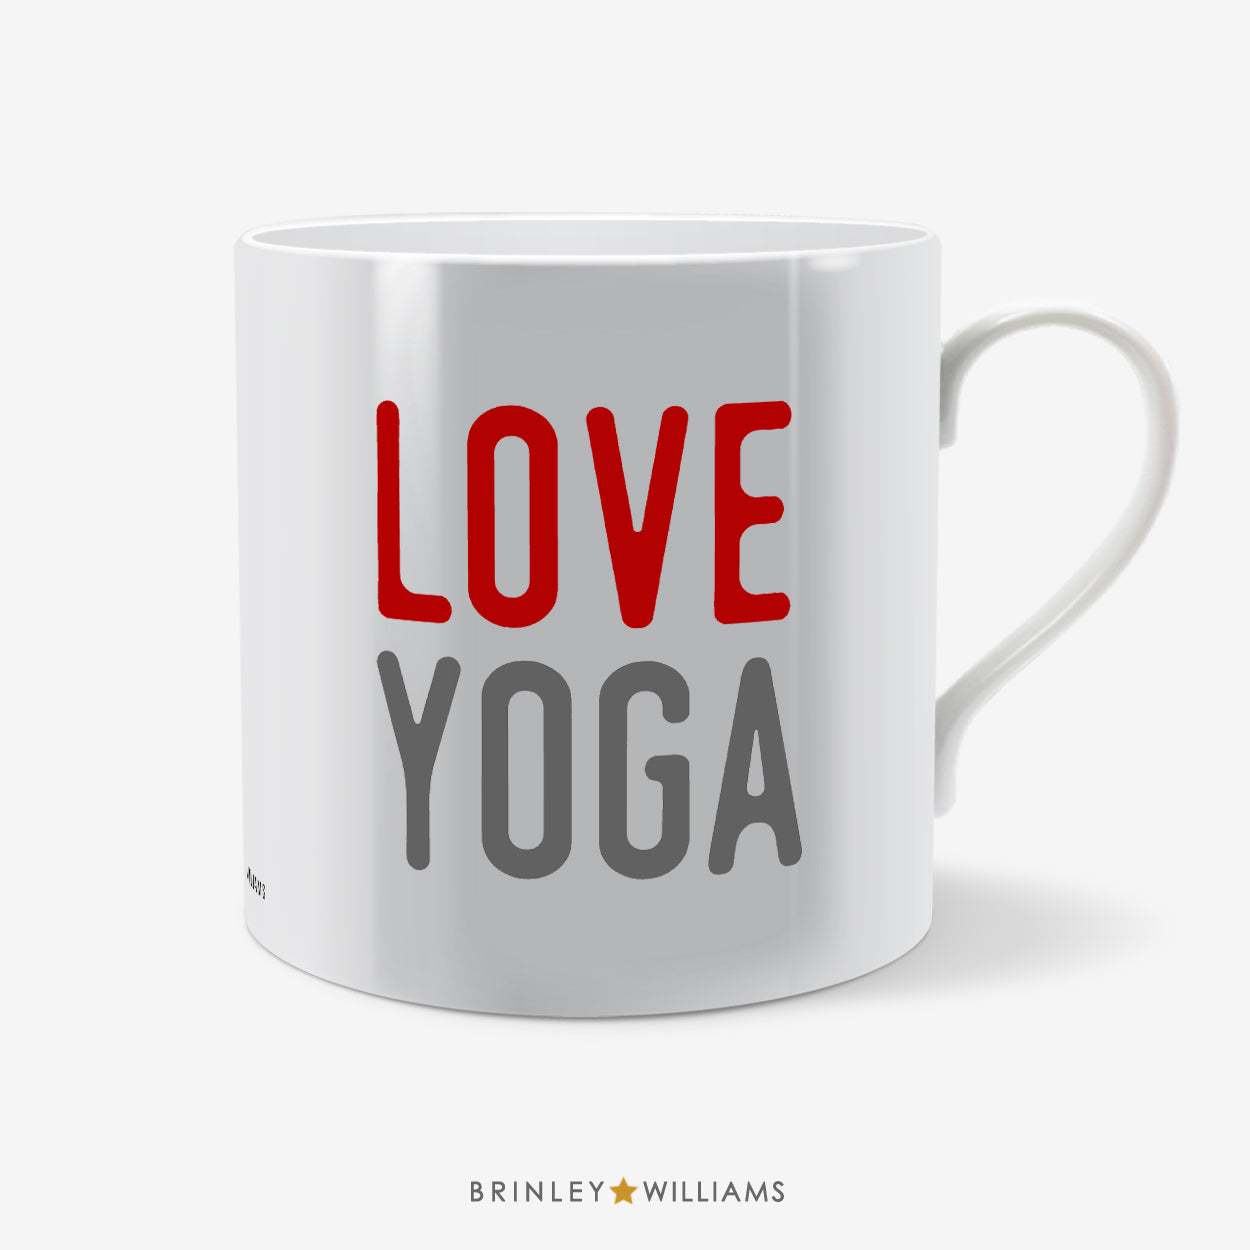 Love Yoga Mug - Red